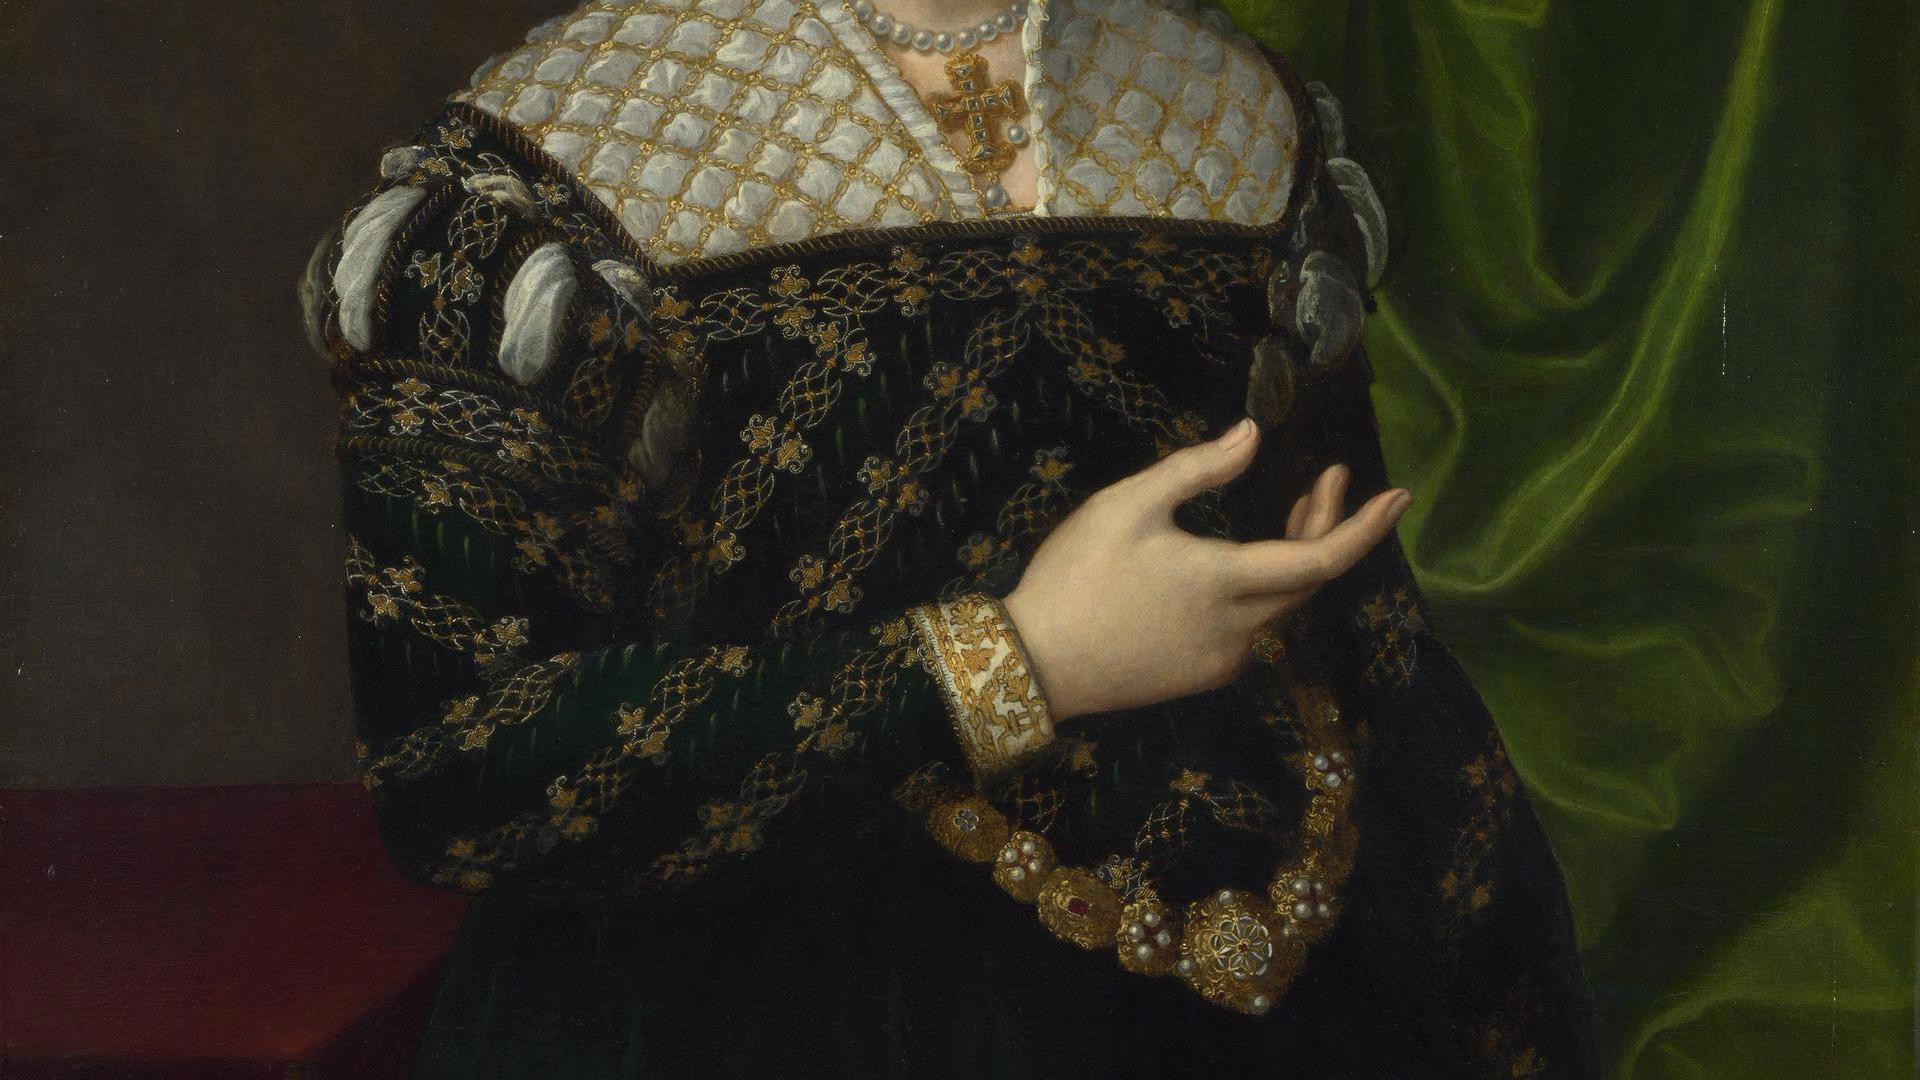 Portrait of a Lady by Italian, Florentine